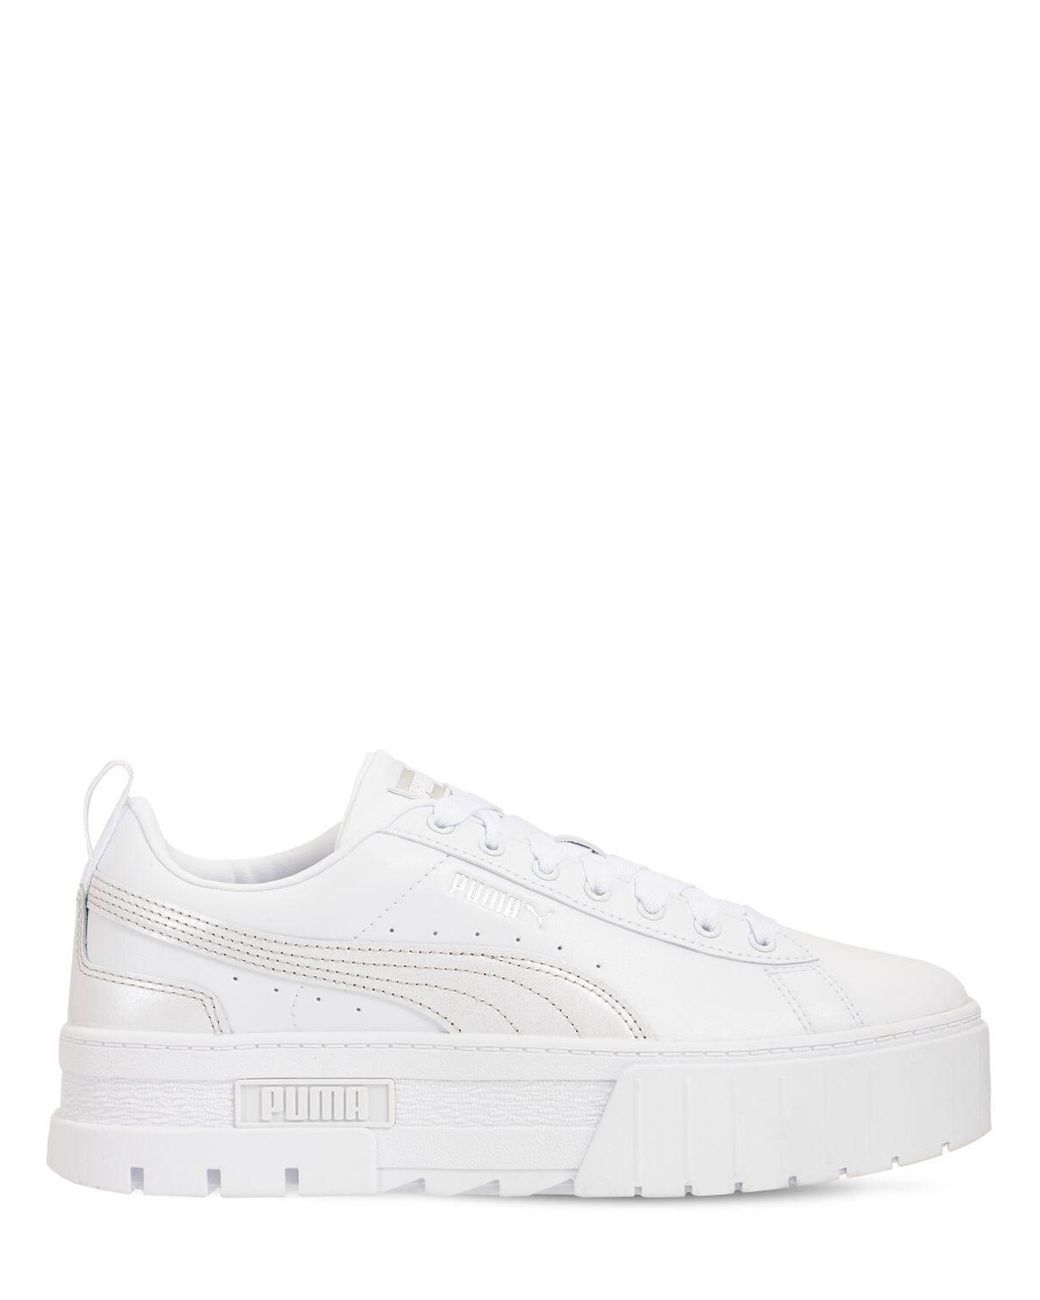 PUMA Mayze Glow Platform Sneakers in White | Lyst